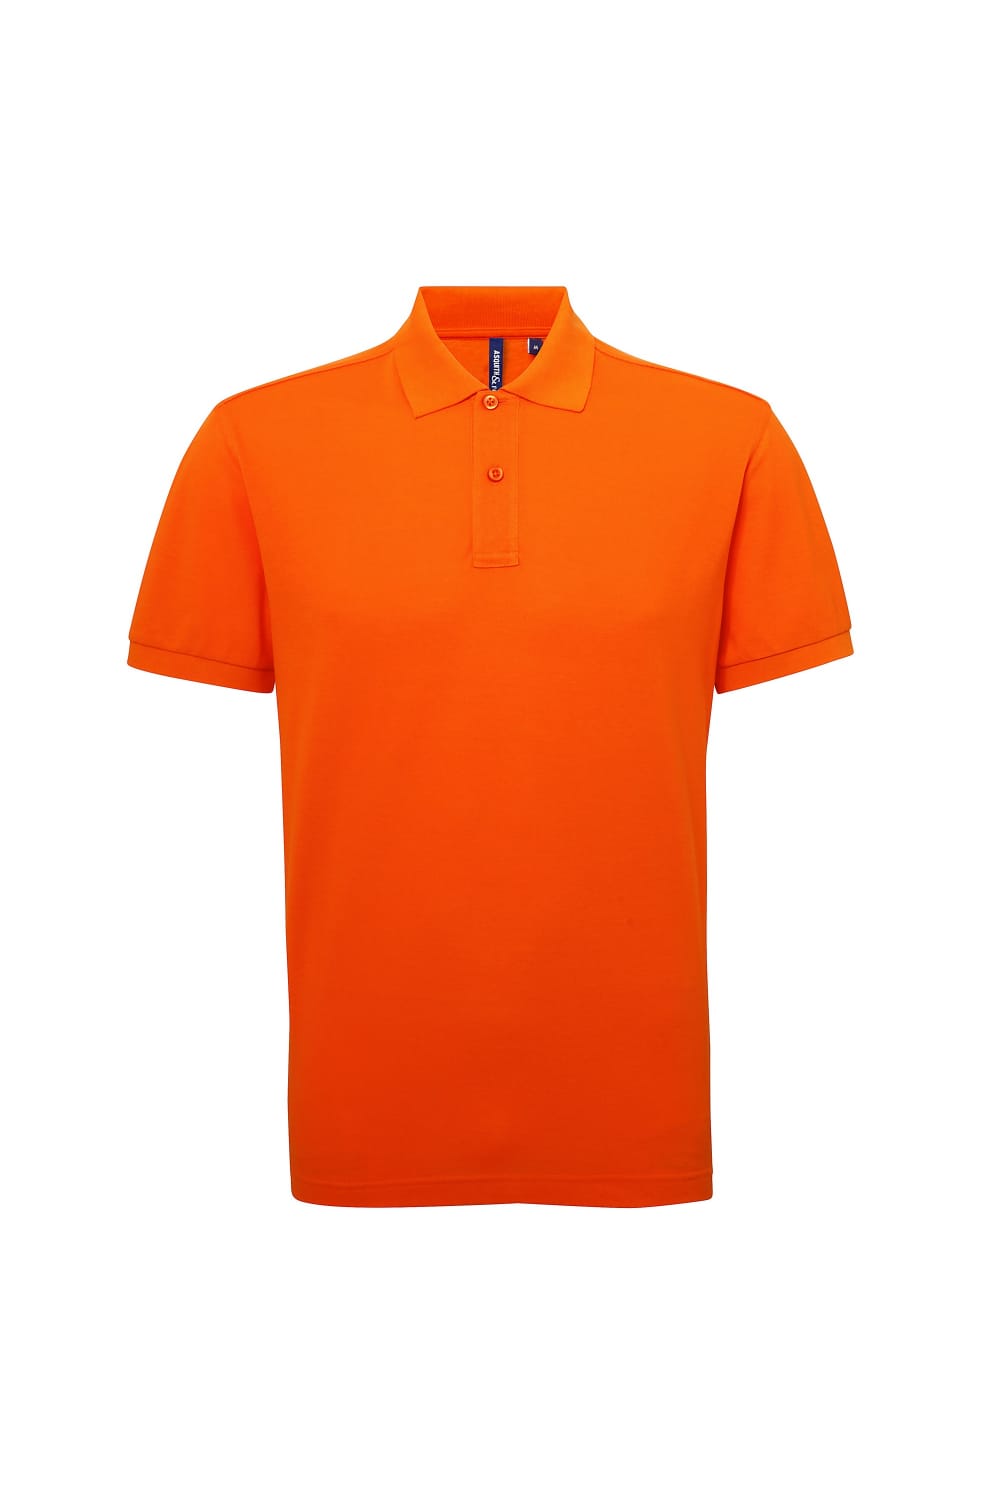 Asquith & Fox Mens Short Sleeve Performance Blend Polo Shirt (Orange)